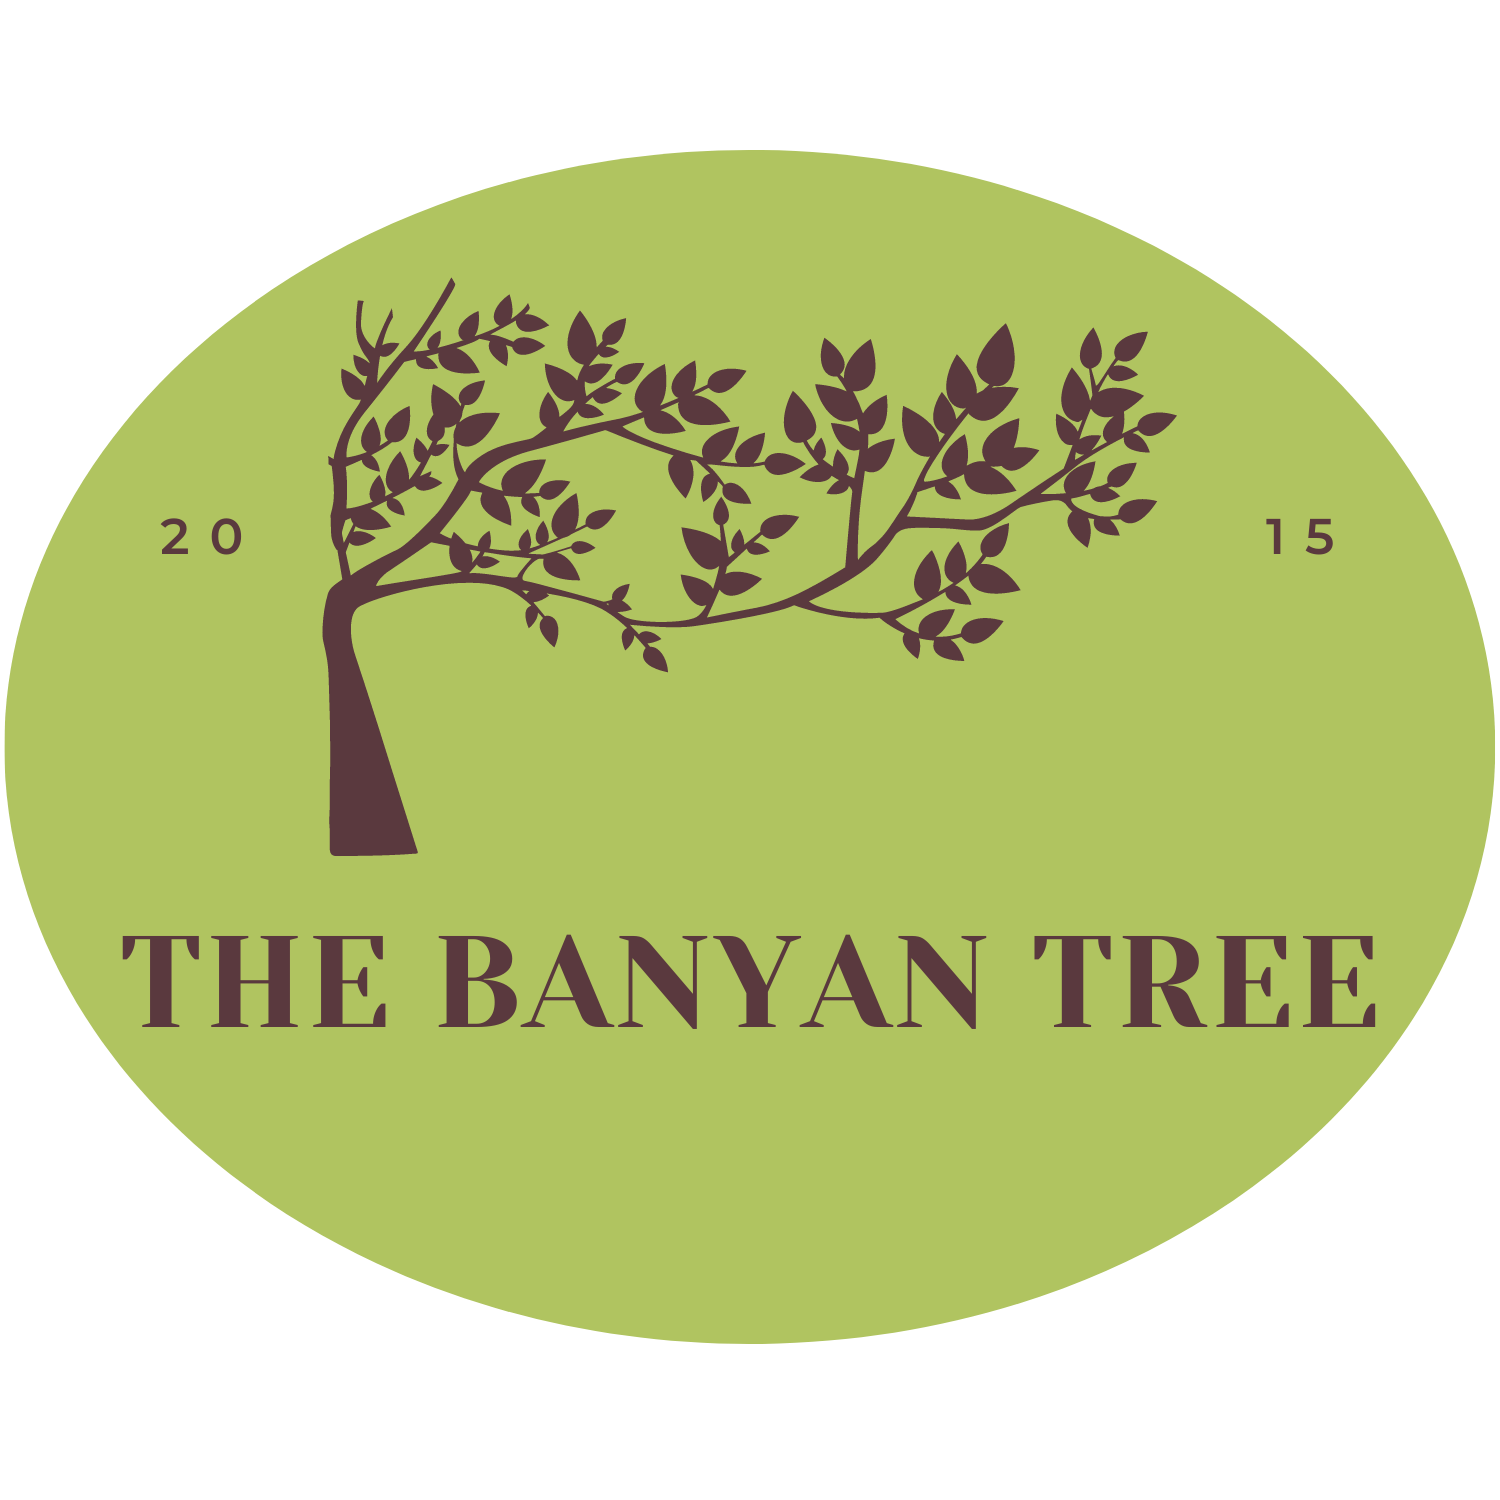  The Banyan Tree